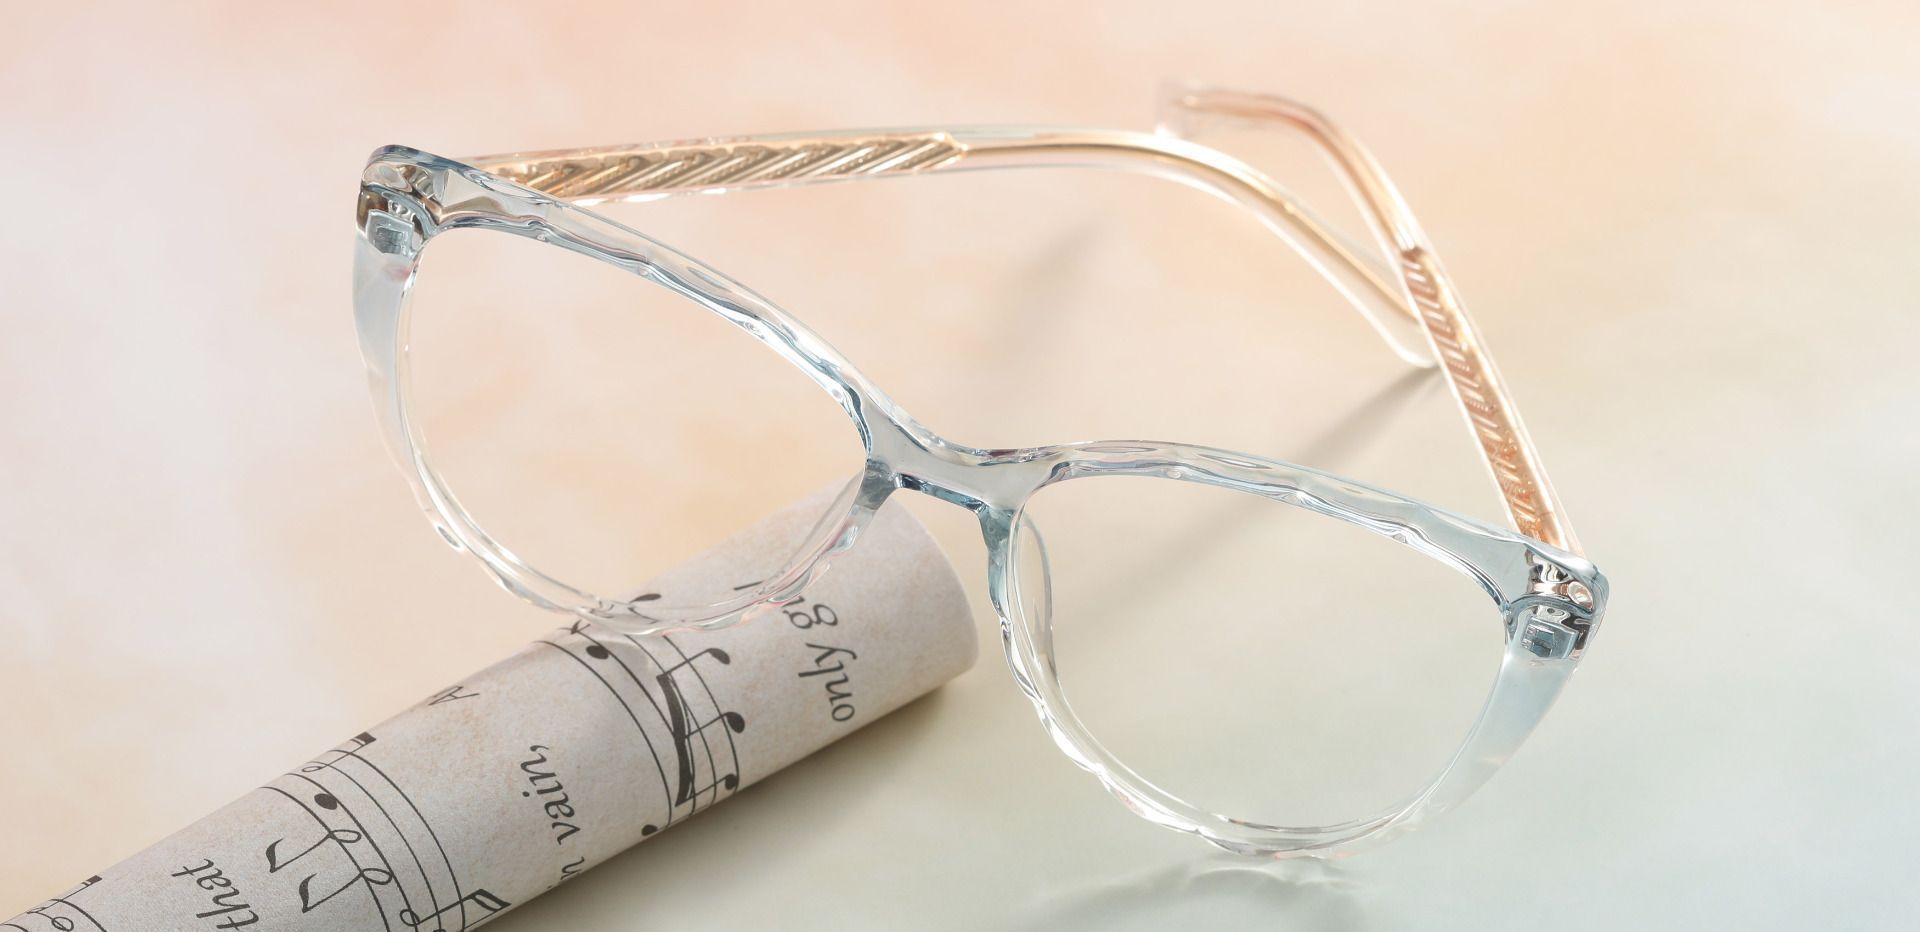 Fontaine Cat Eye Prescription Glasses - Blue